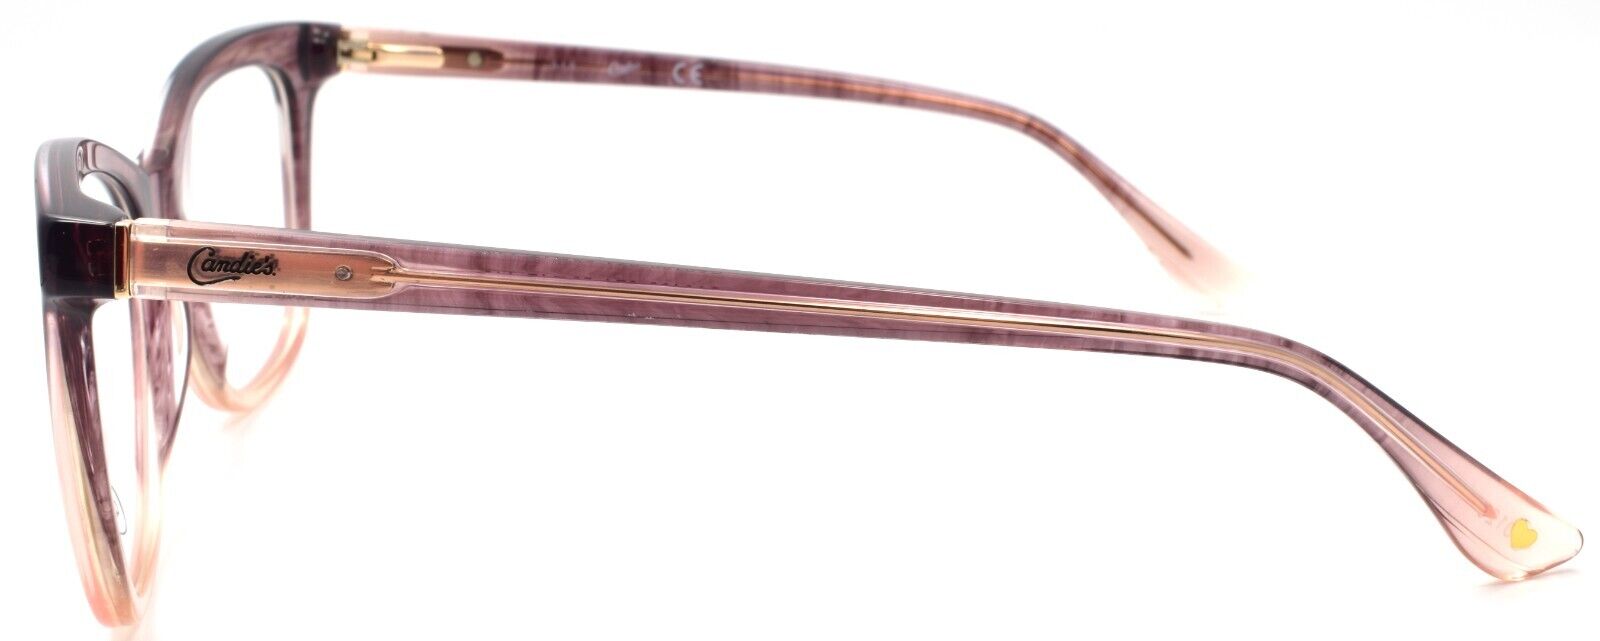 3-Candies CA0180 074 Women's Eyeglasses Frames 52-17-140 Pink Gradient-889214119803-IKSpecs